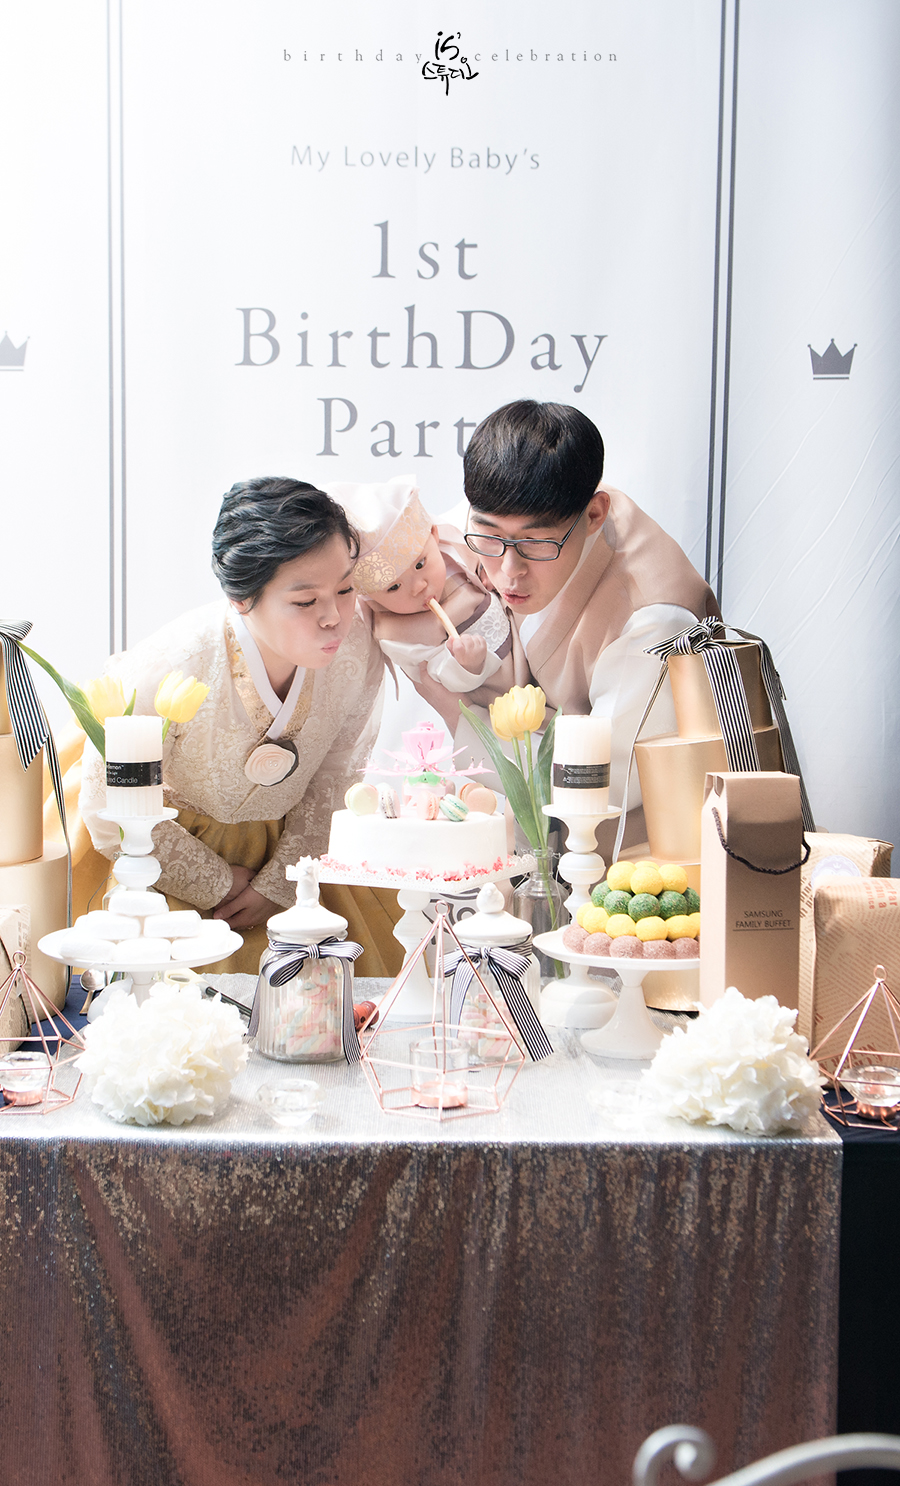 SJ 의 첫번째 생일 first birthday story.